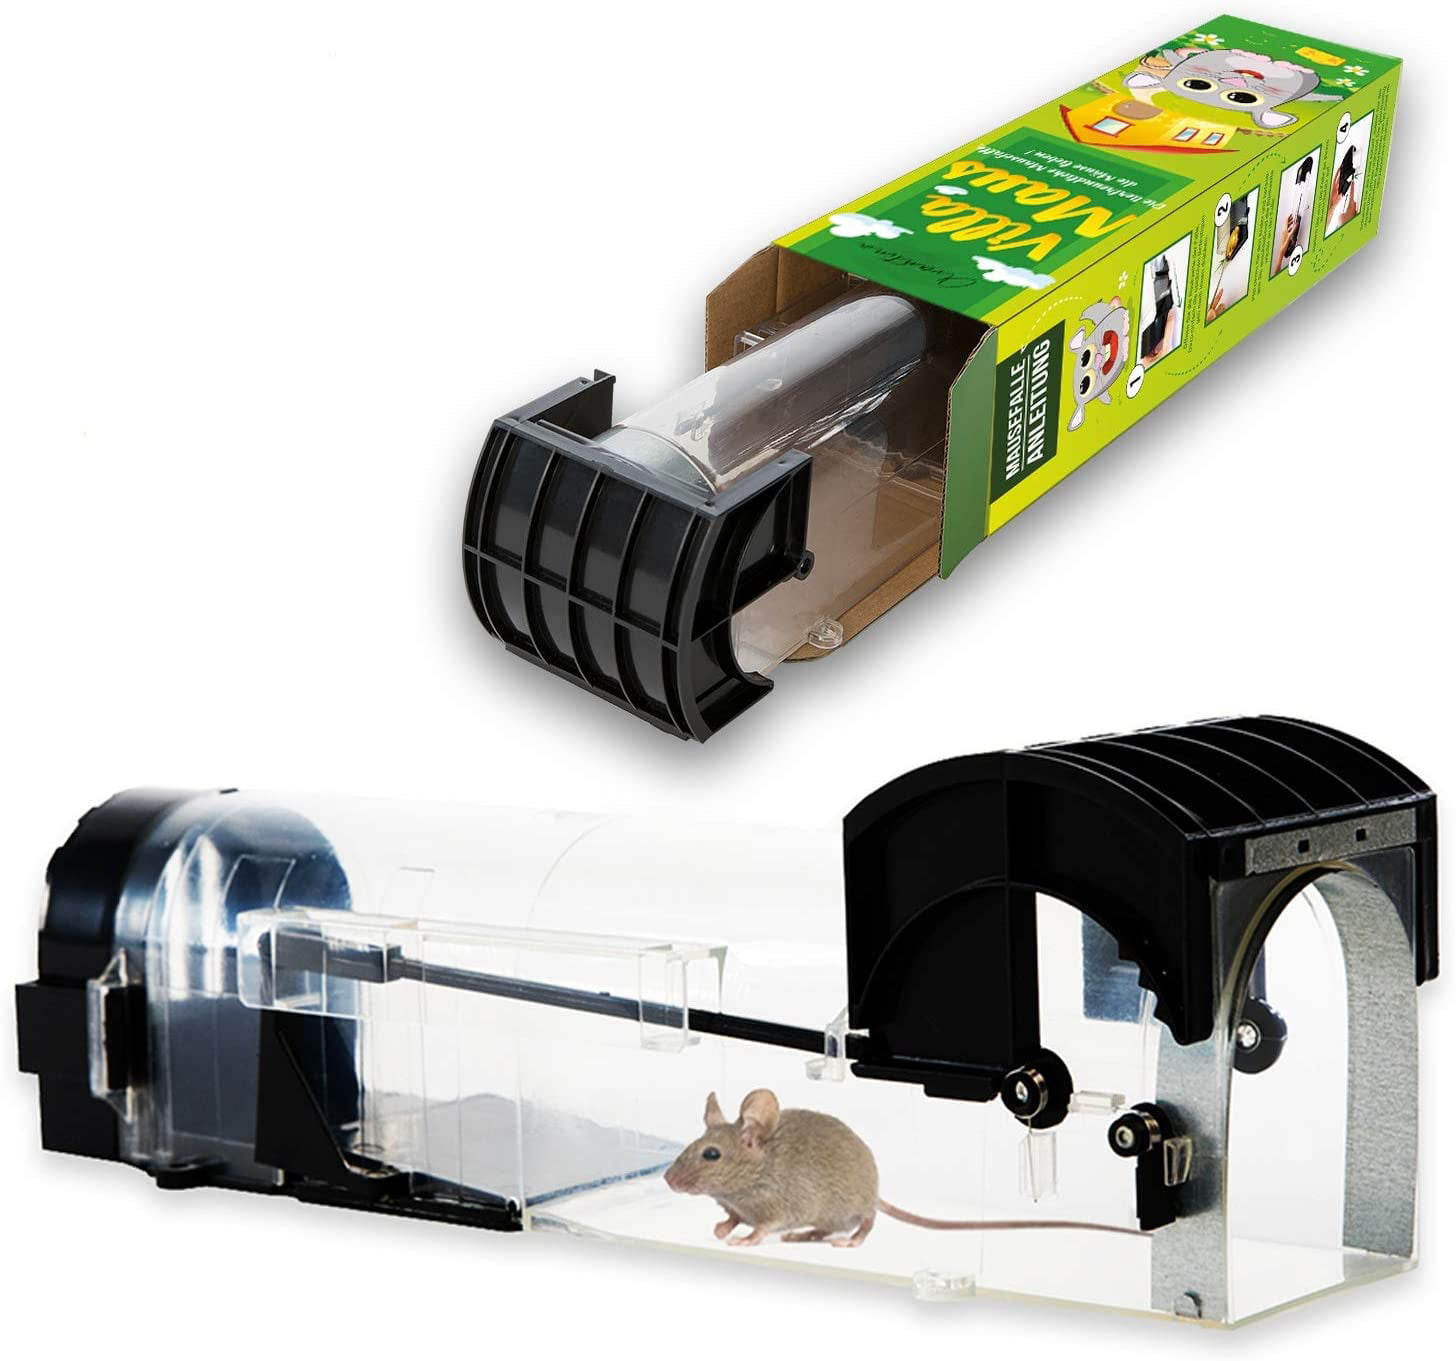 Professional Auto Mouse Traps safe Mousetrap Catcher Fit For living room kitchen 